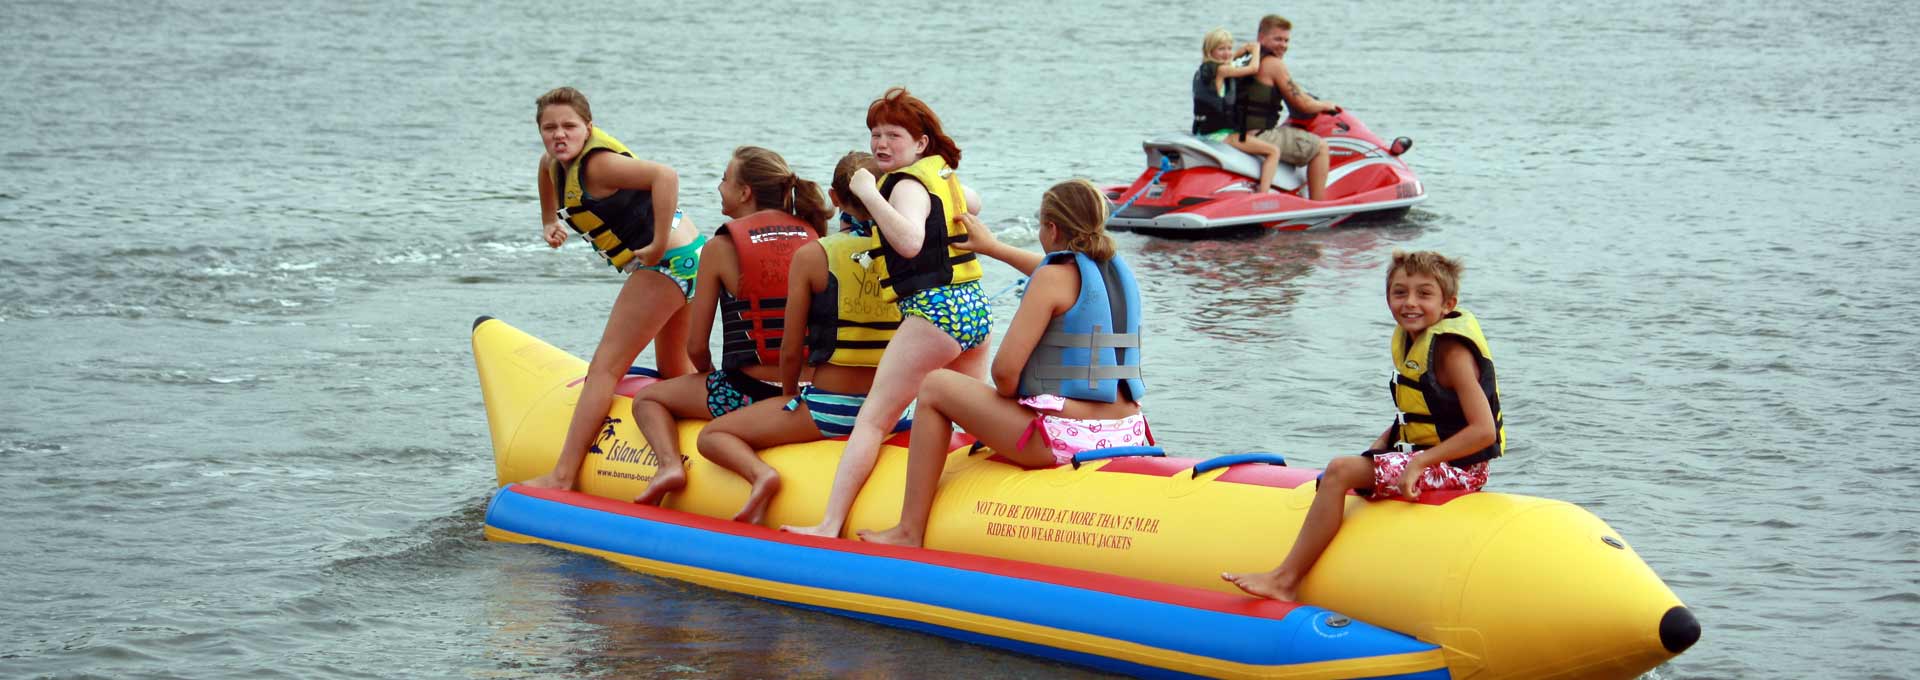 Banana Boat Ride Fun Things For Kids In Charleston, SC